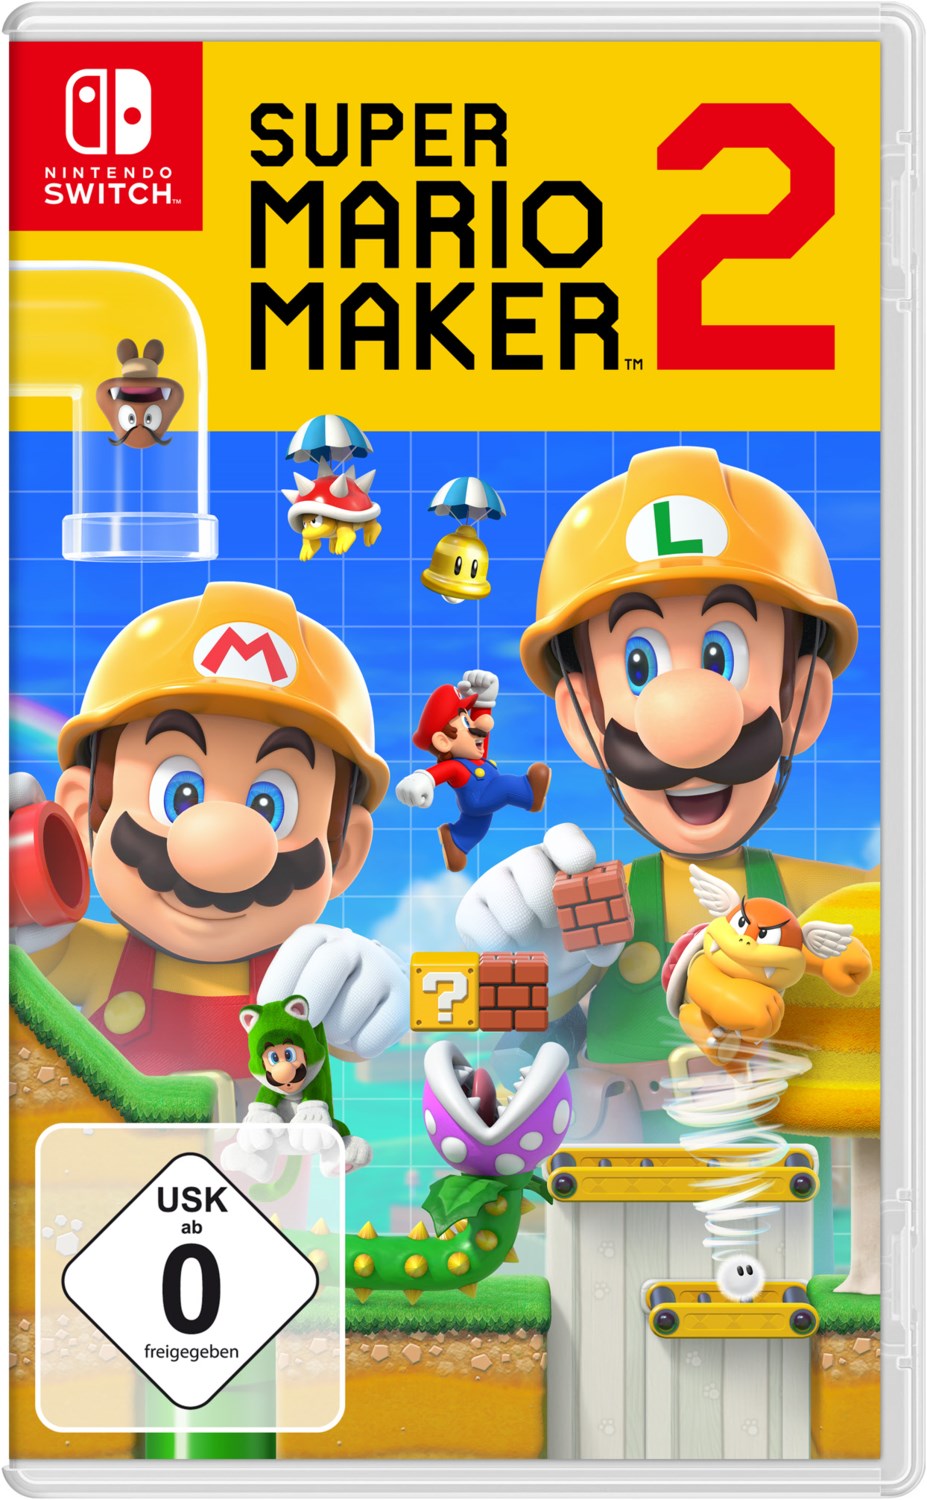 Super Mario Maker 2 von Nintendo